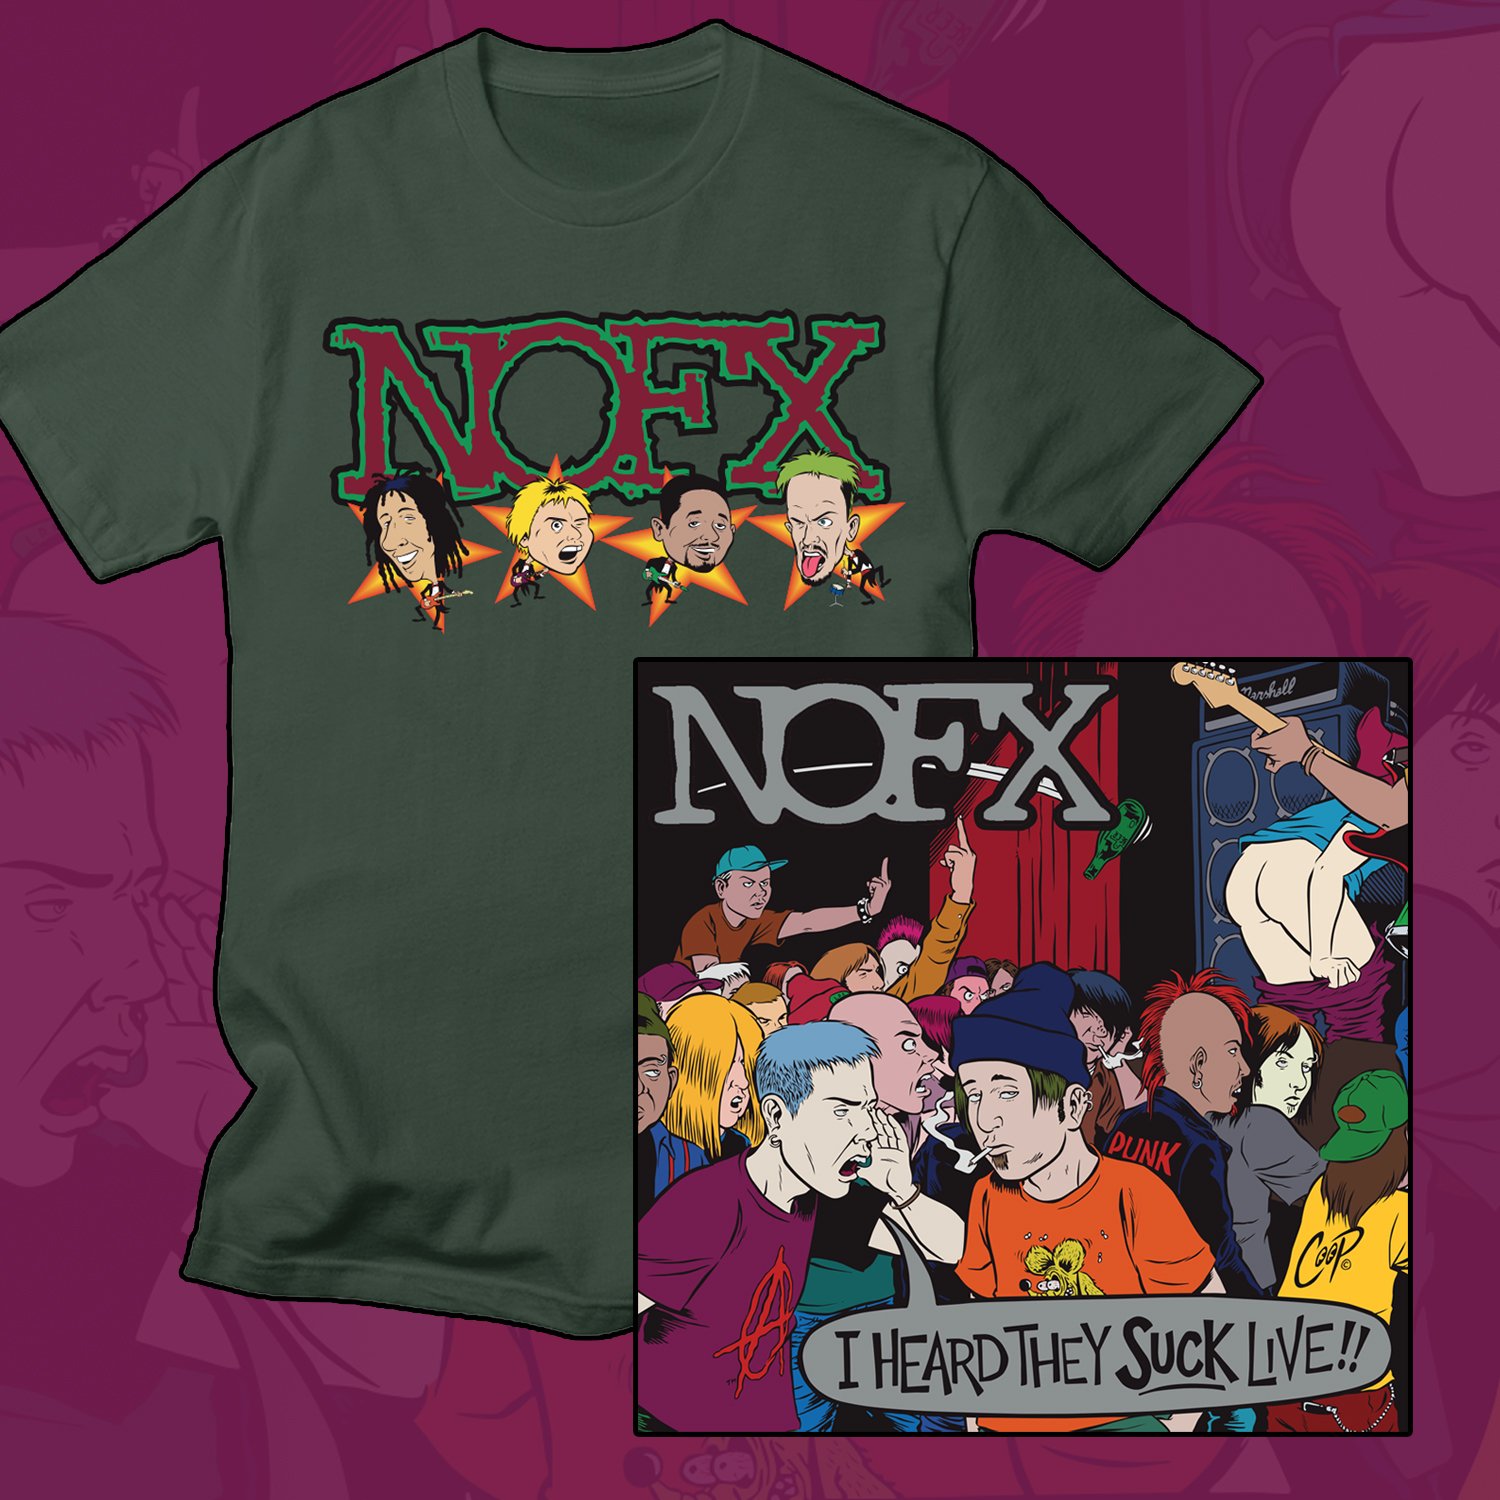 NOFX - I Heard They Suck Live COLOR VINYL Bundle